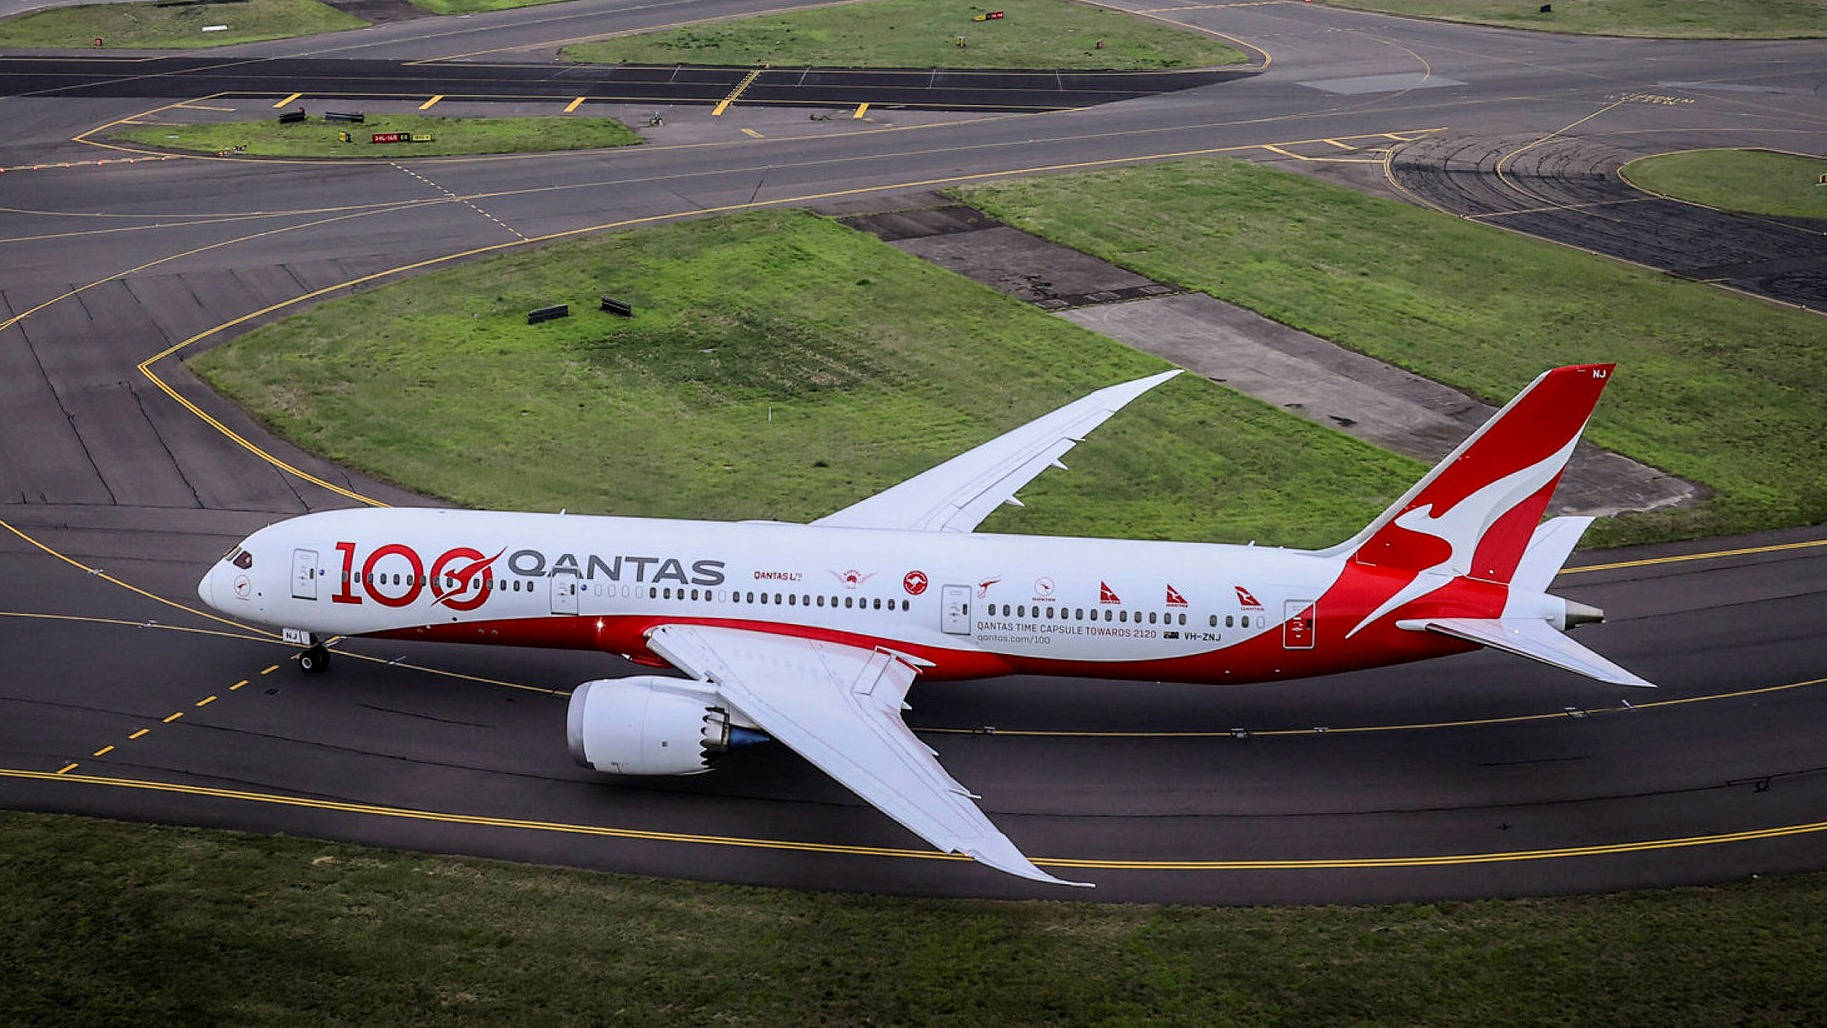 Pasajerode Qantas Airbus En La Pista De Aterrizaje Fondo de pantalla